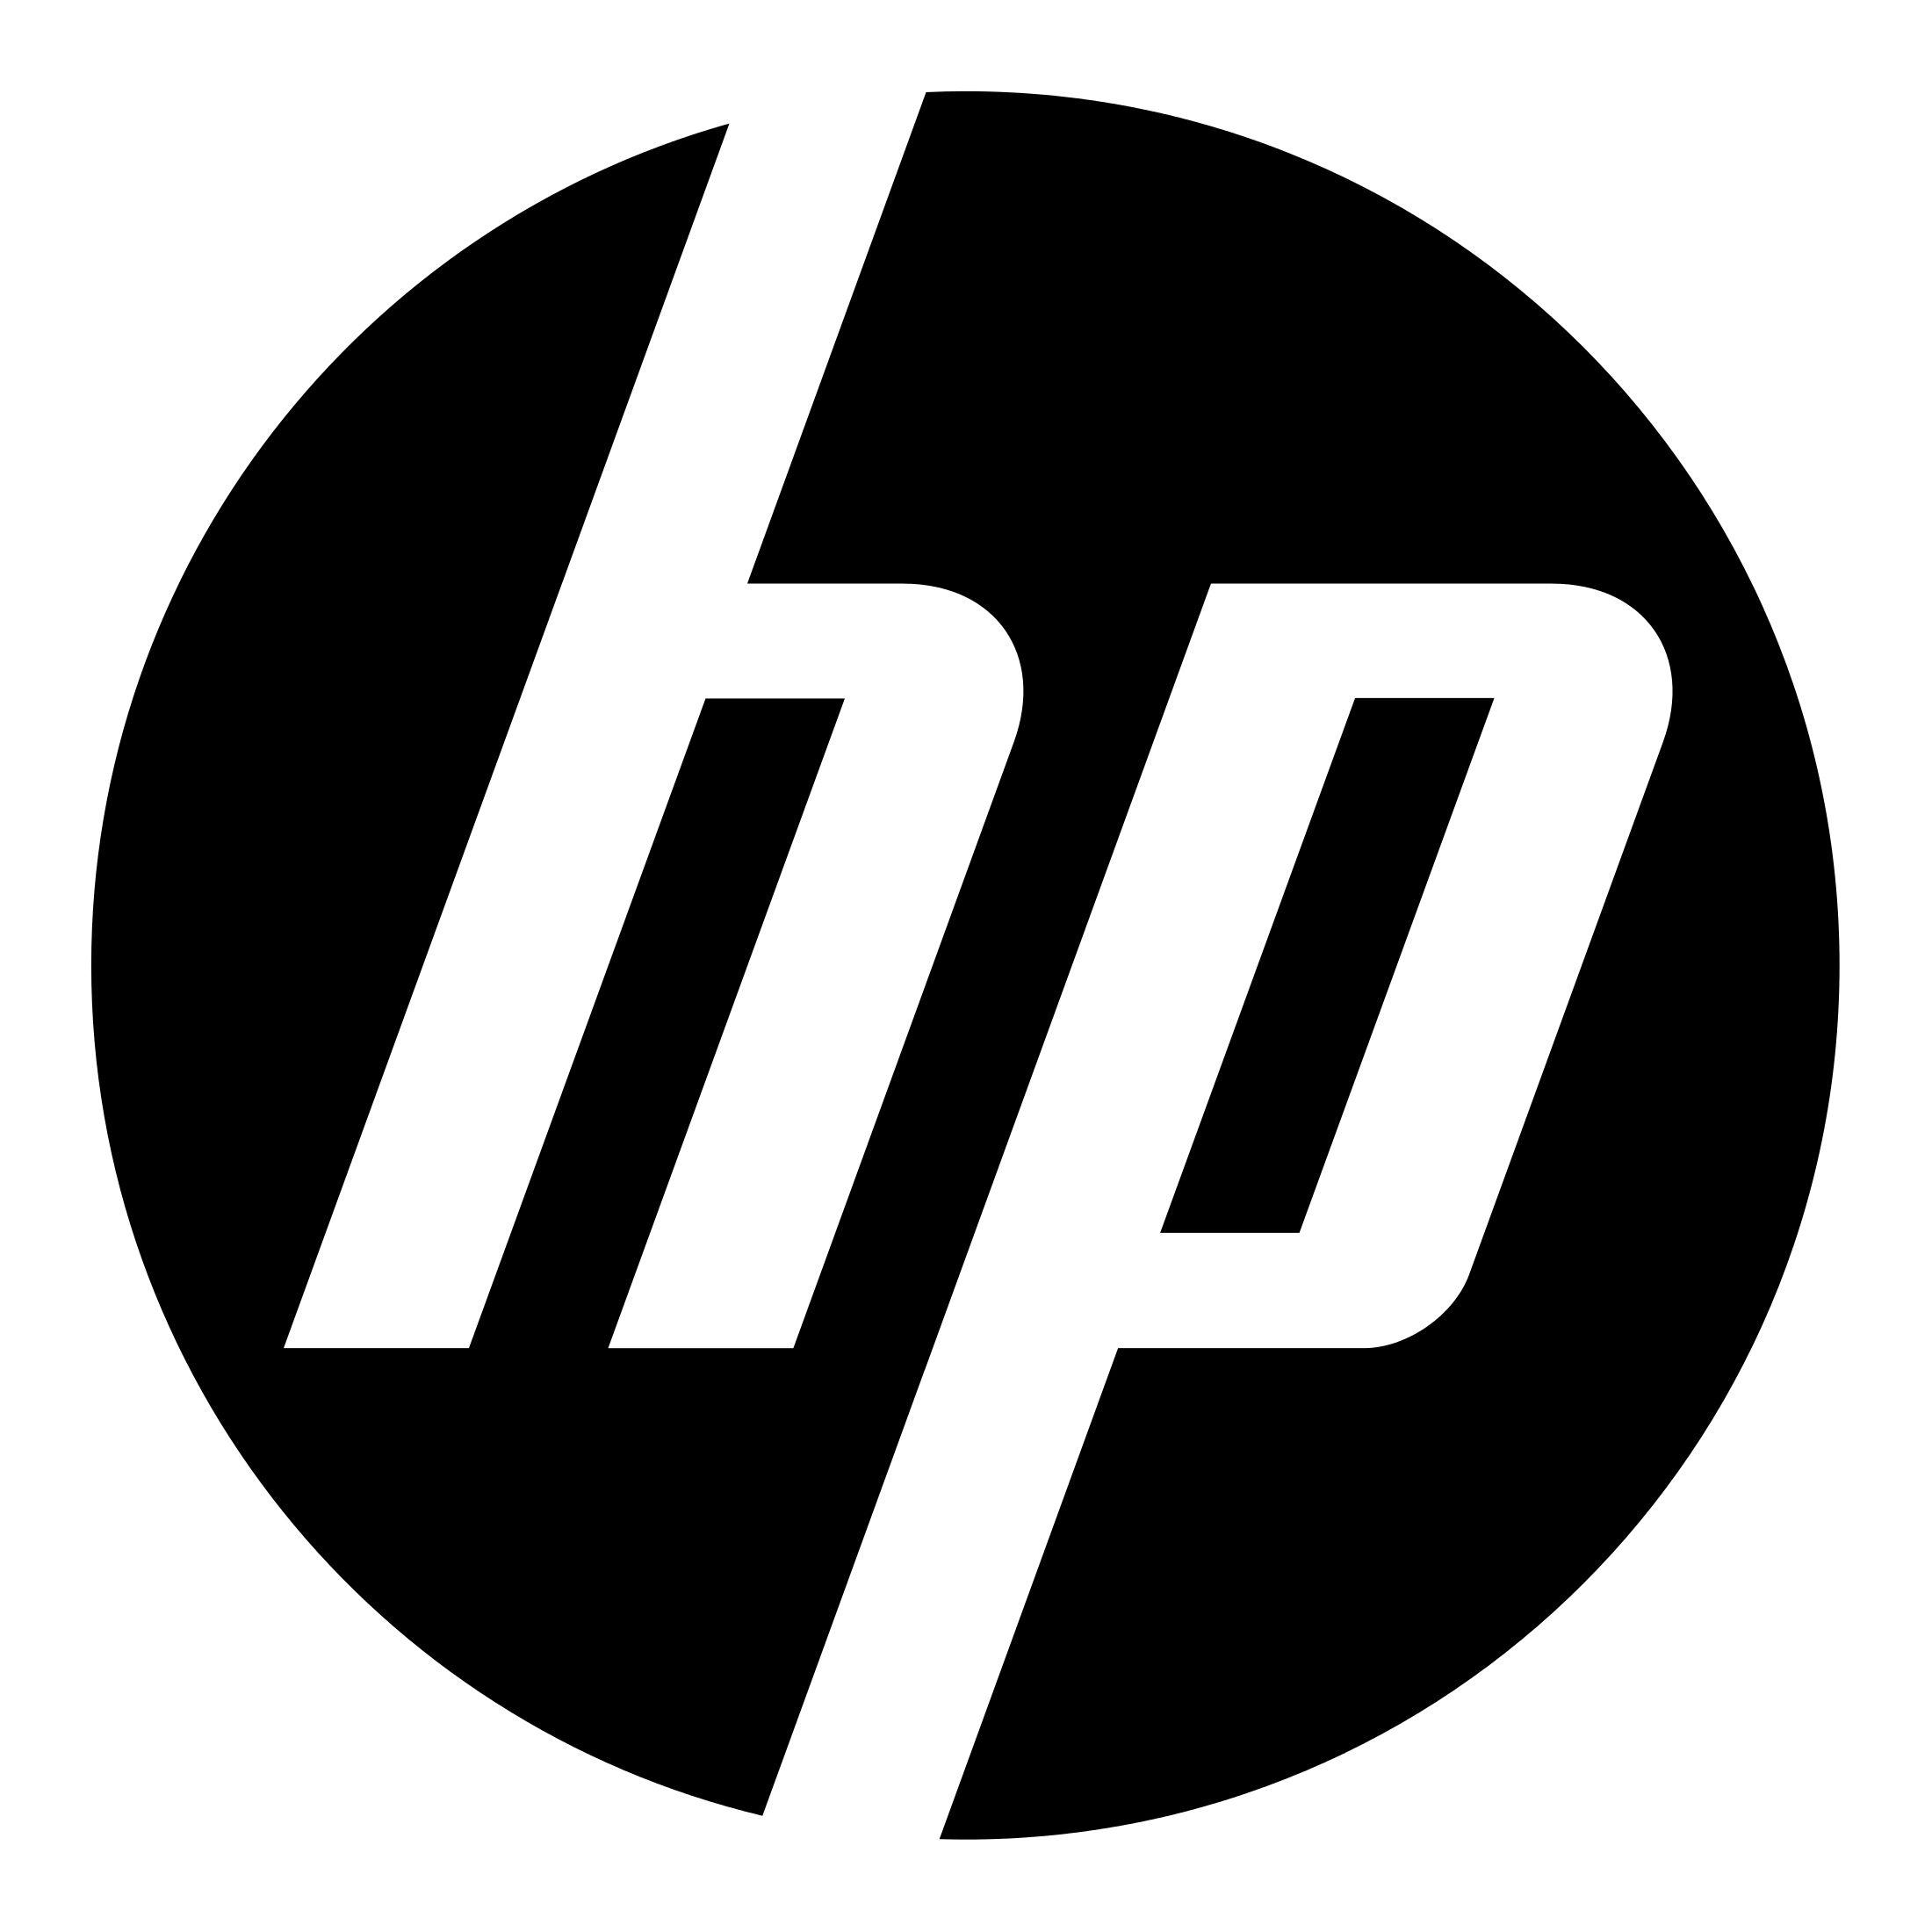 New Hewlett Packard Logo - HP Logo, Hewlett-Packard symbol meaning, history and evolution